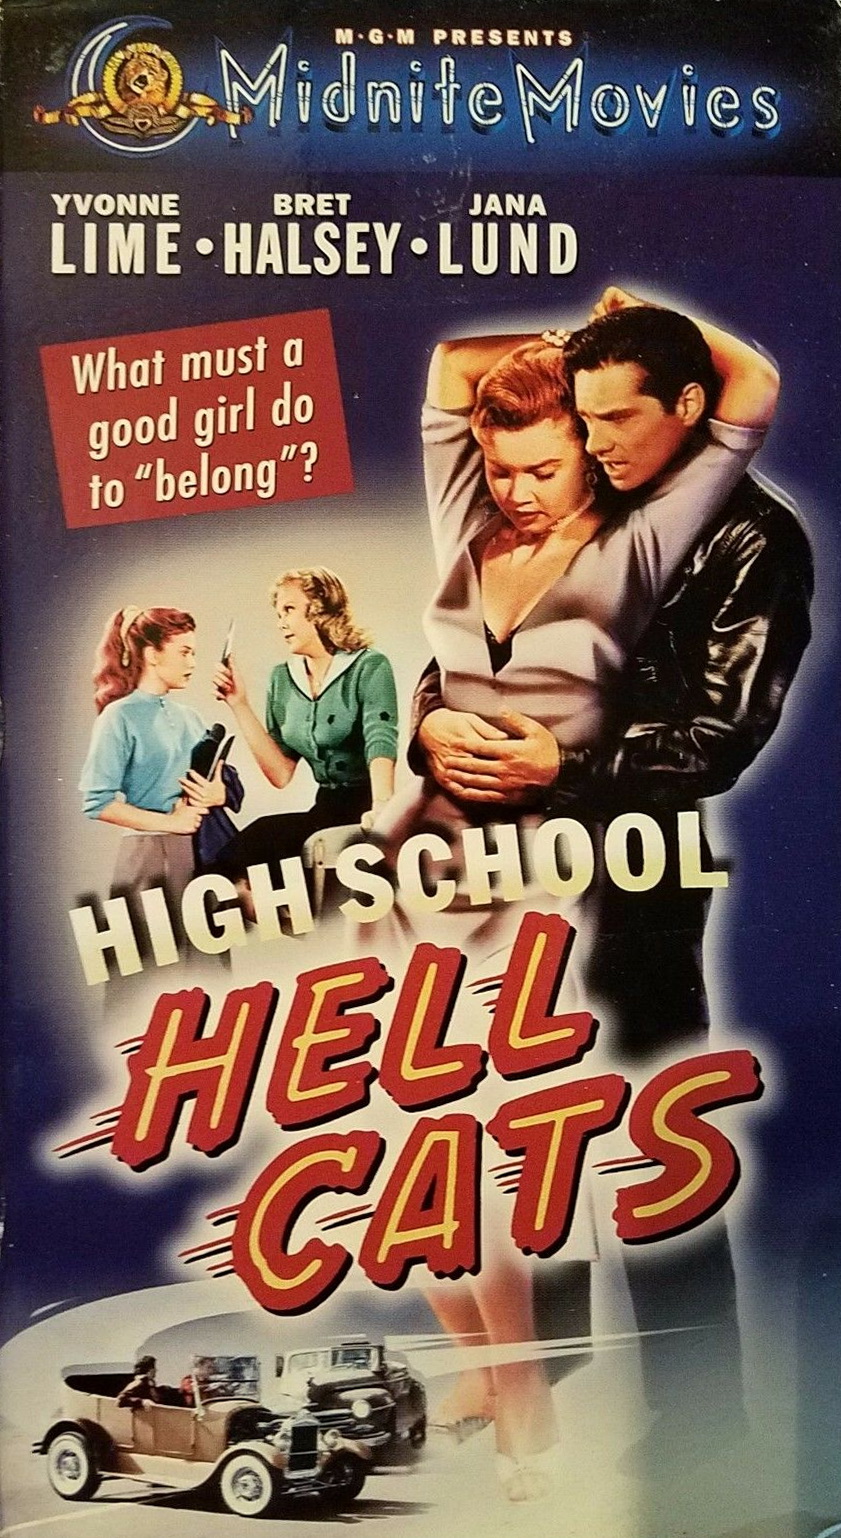 High school hellcats